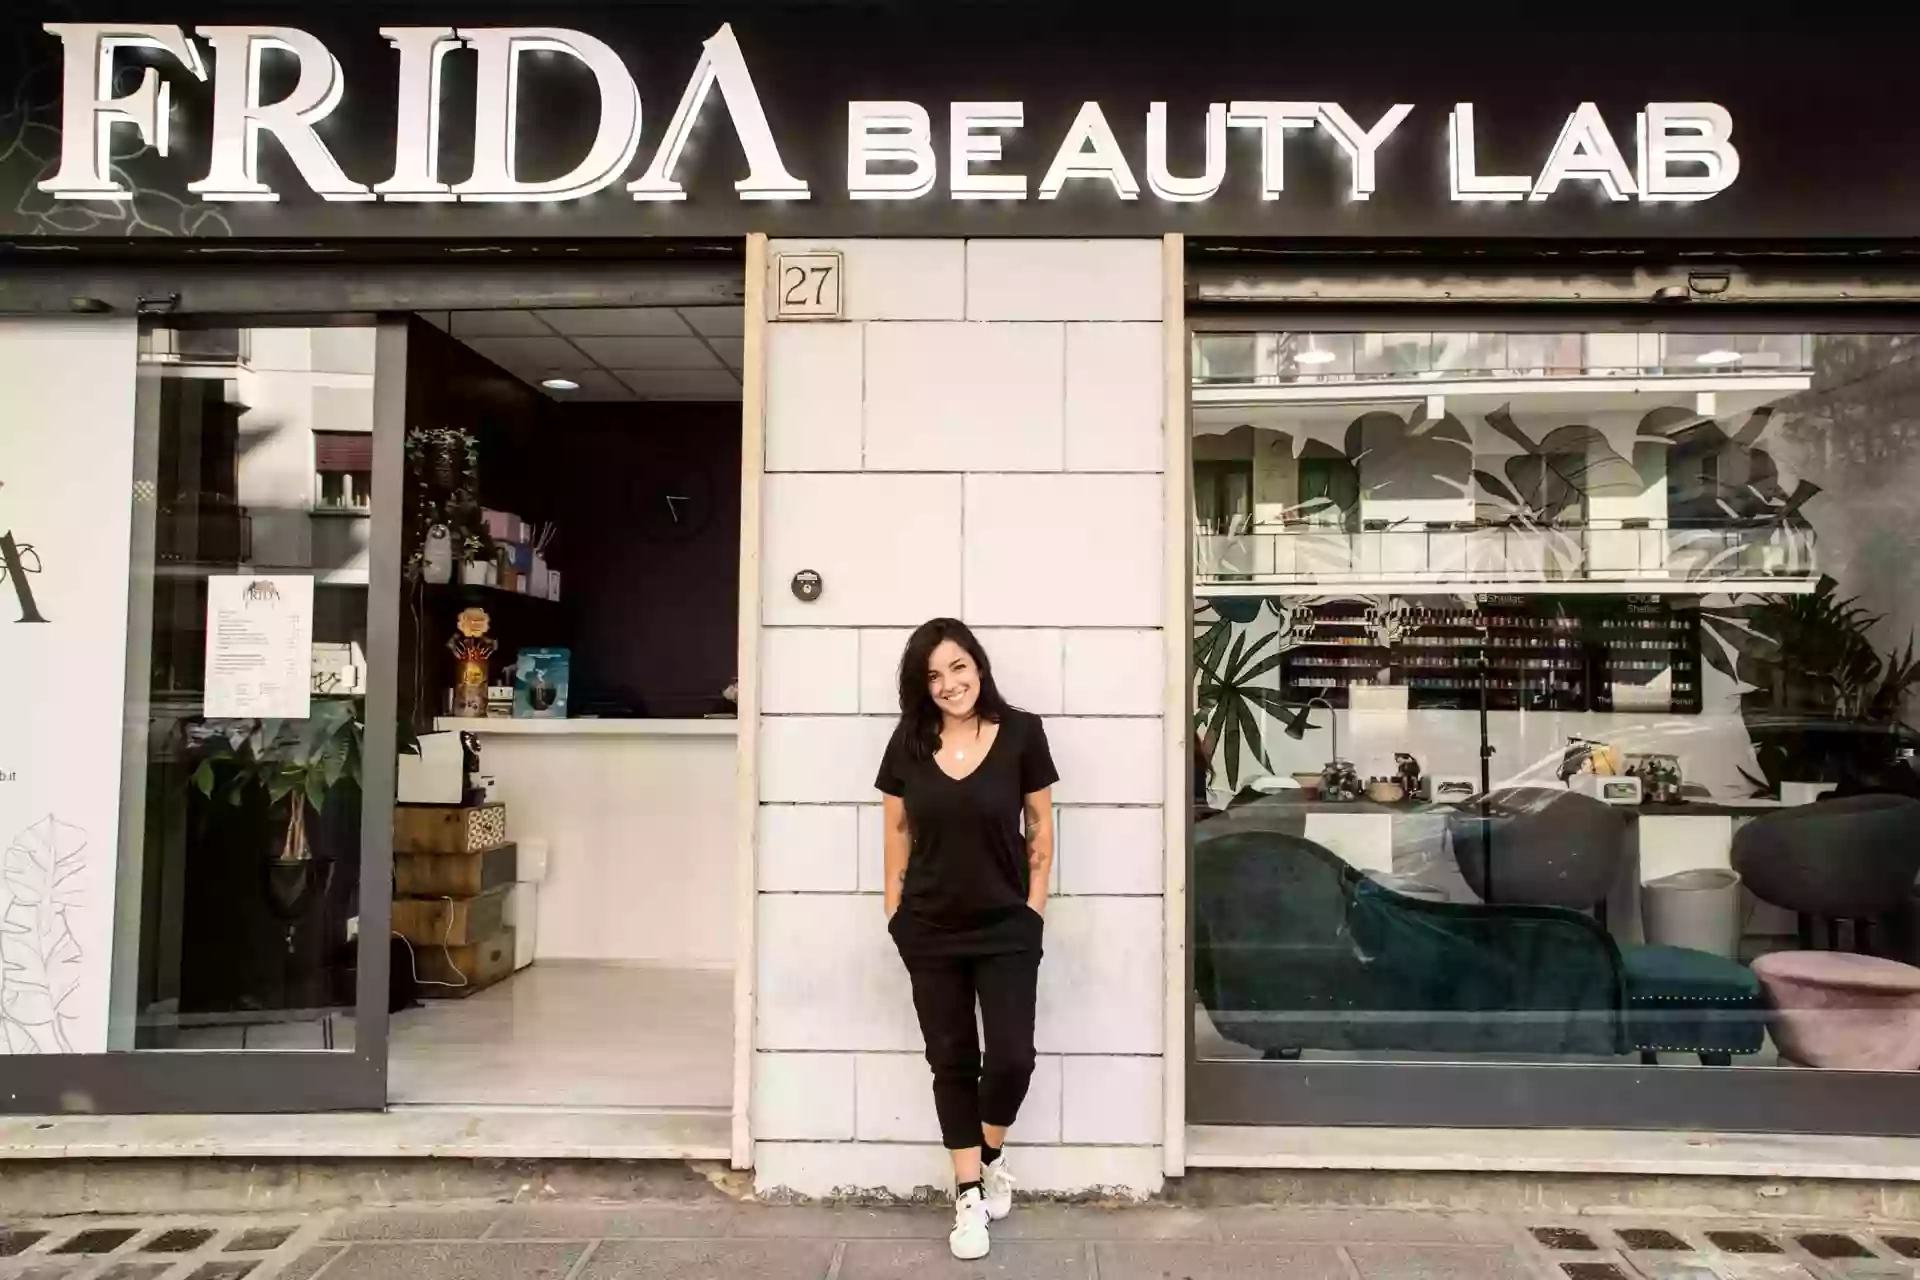 Frida Beauty Lab Via Marcianise